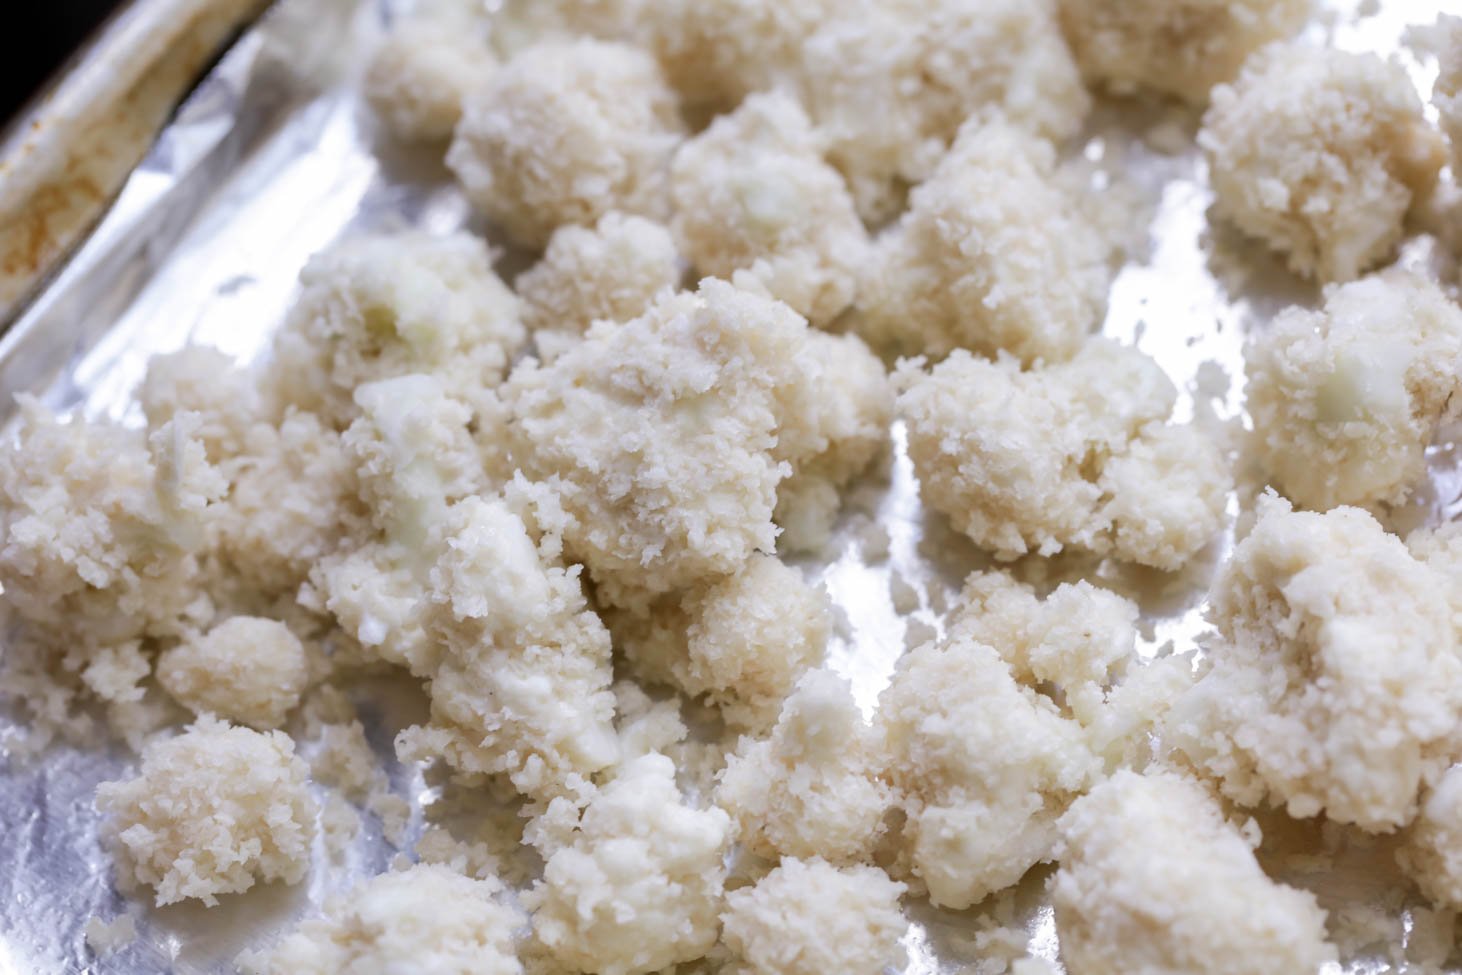 Buffalo Cauliflower Bites tossed in Panko and on baking sheet